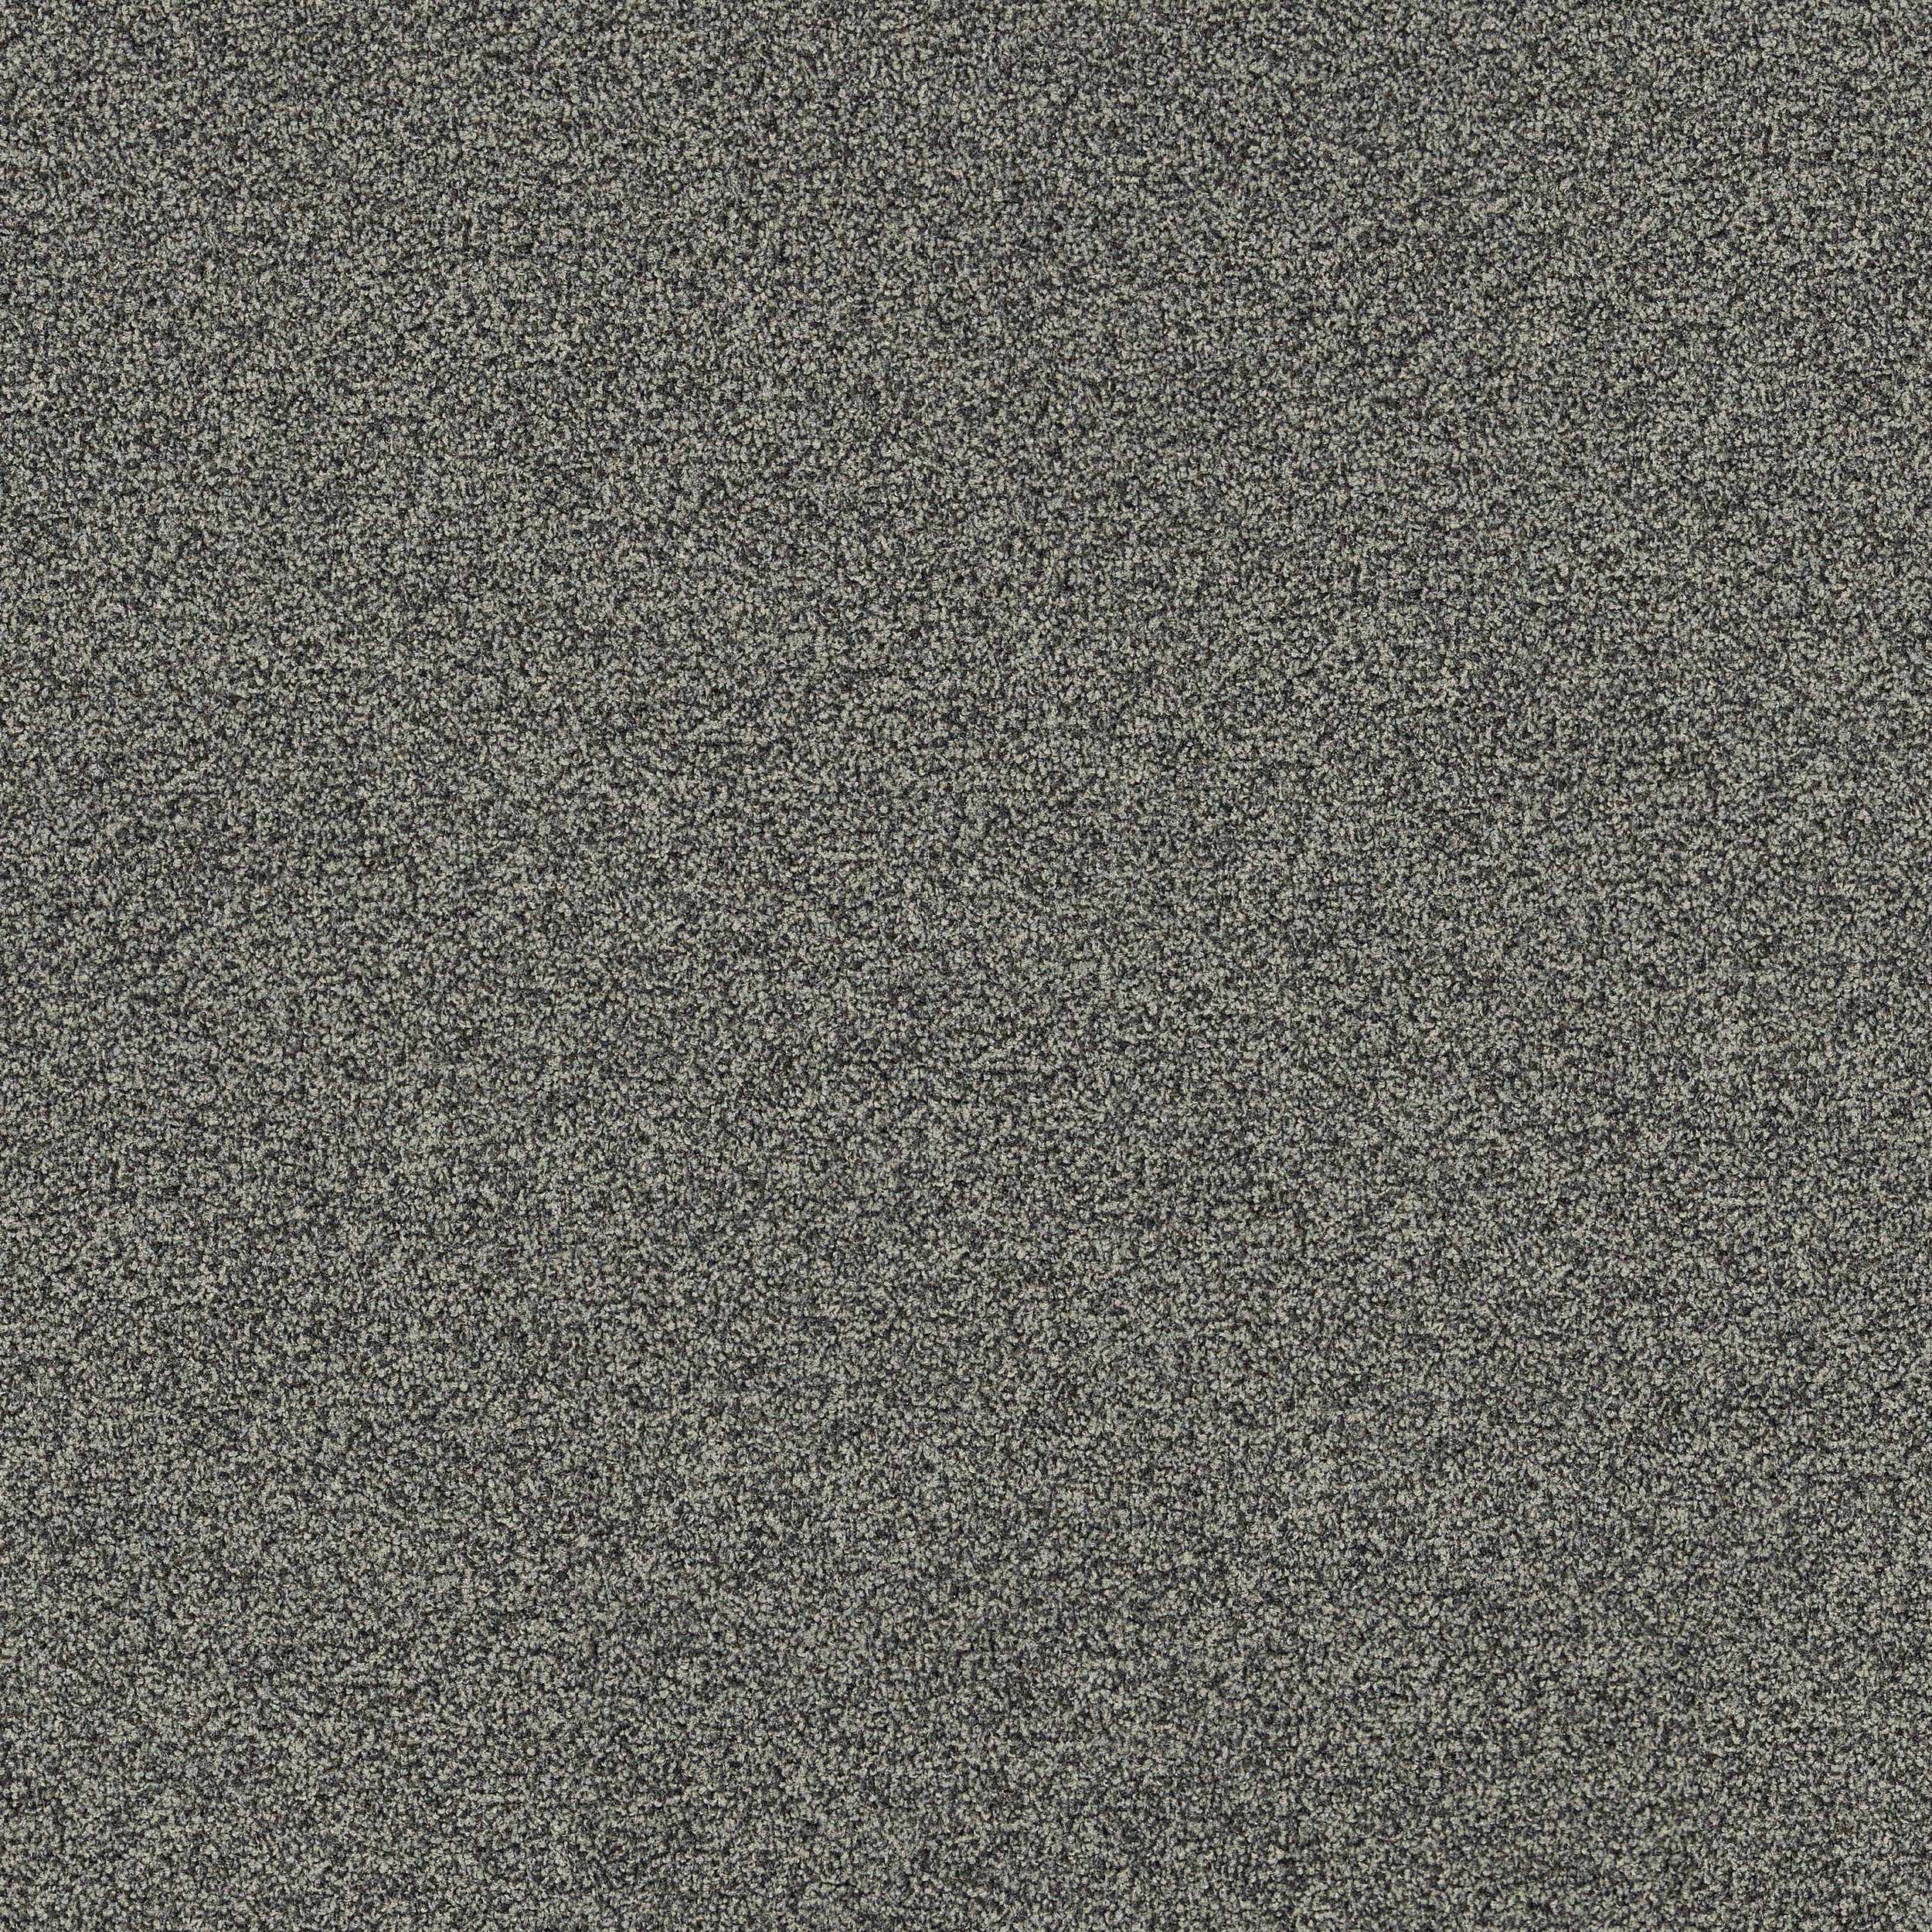 image Polichrome Stipple Carpet Tile In Moonrock numéro 2